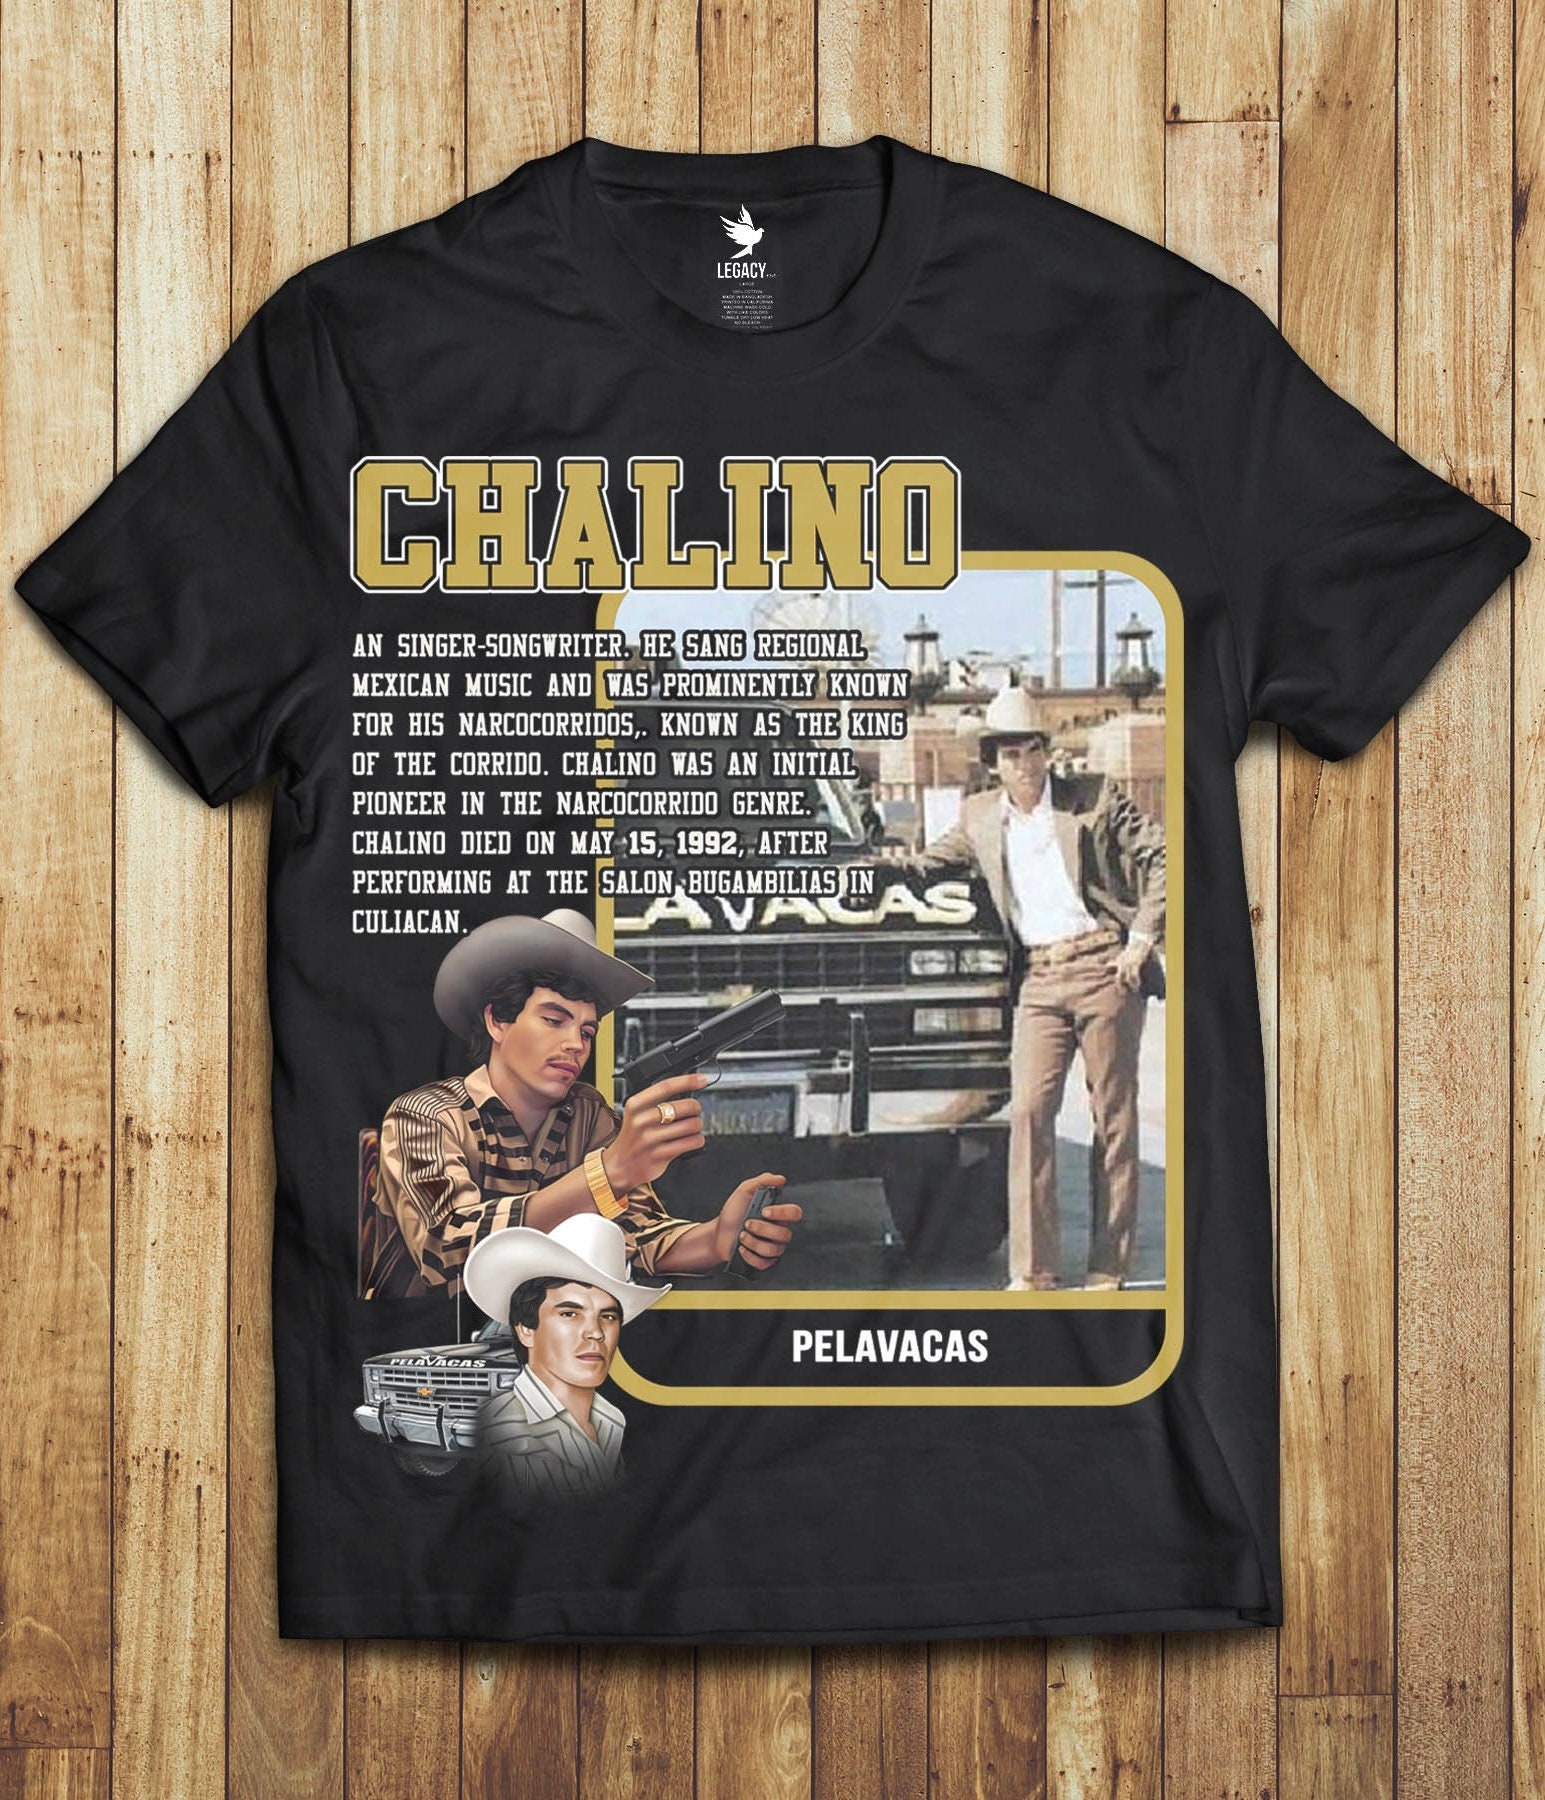 Chalino Sanchez Card T-Shirt